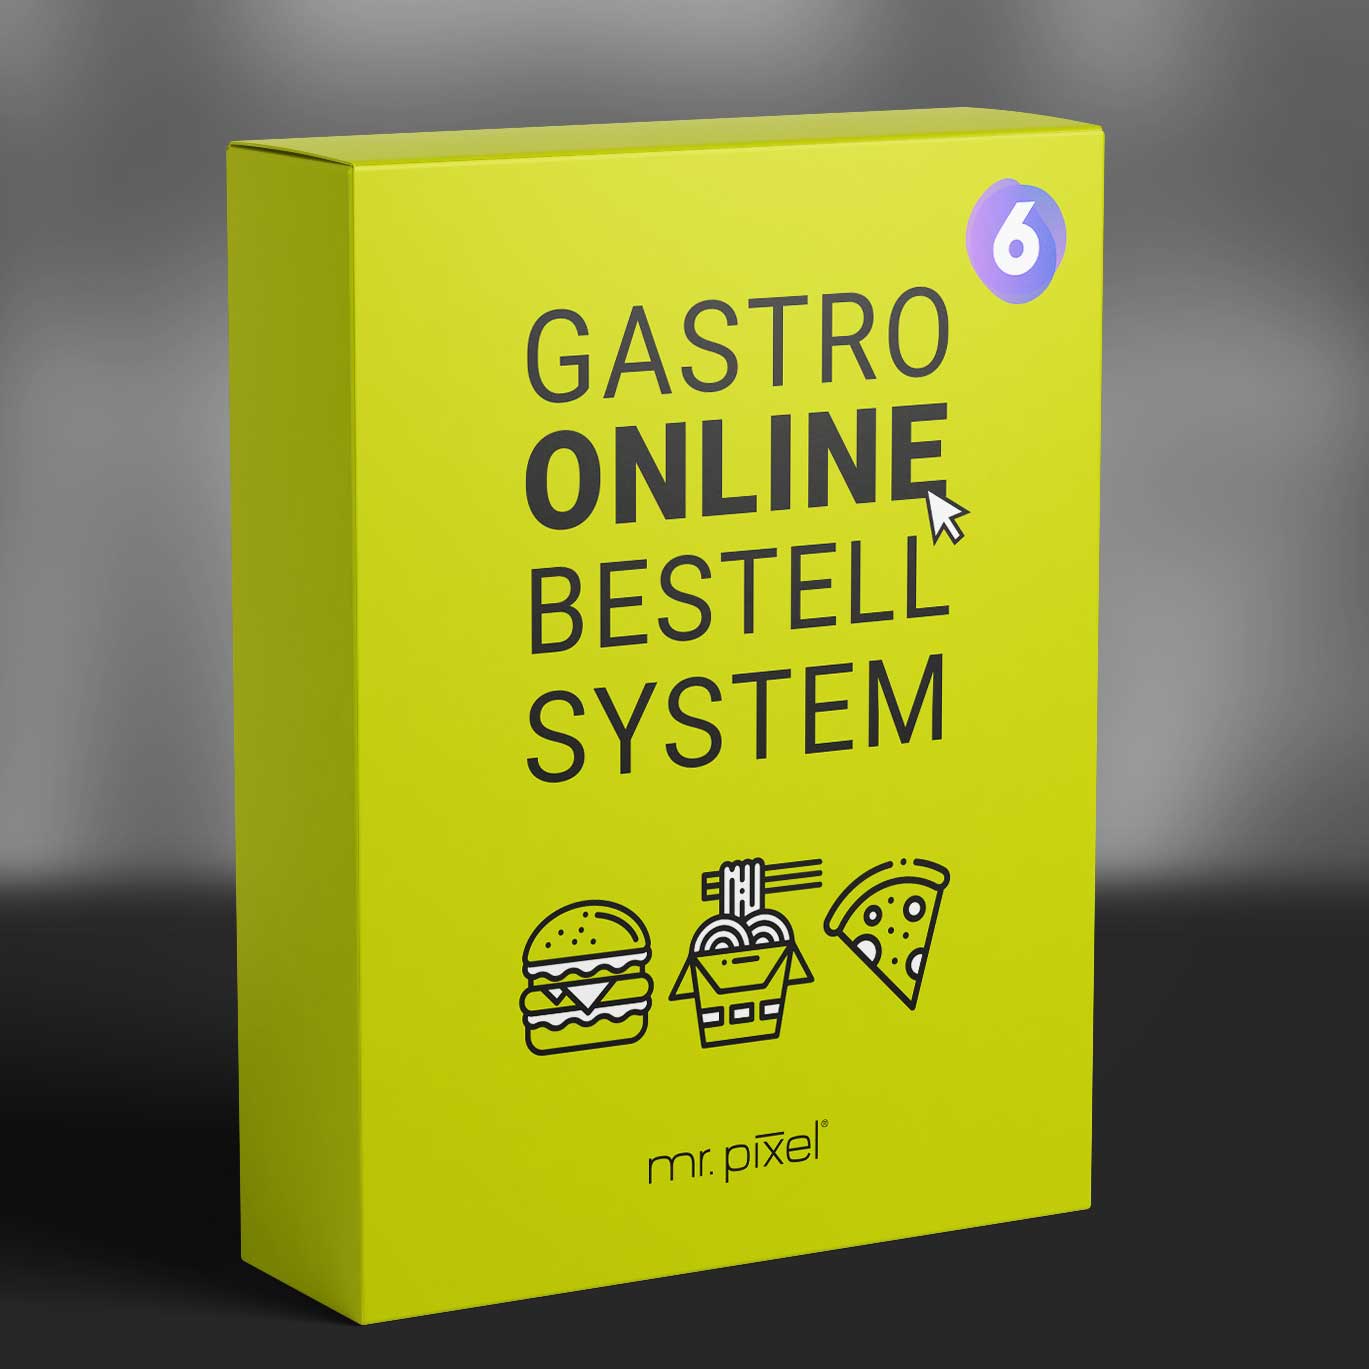 Gastro Online Bestellsystem